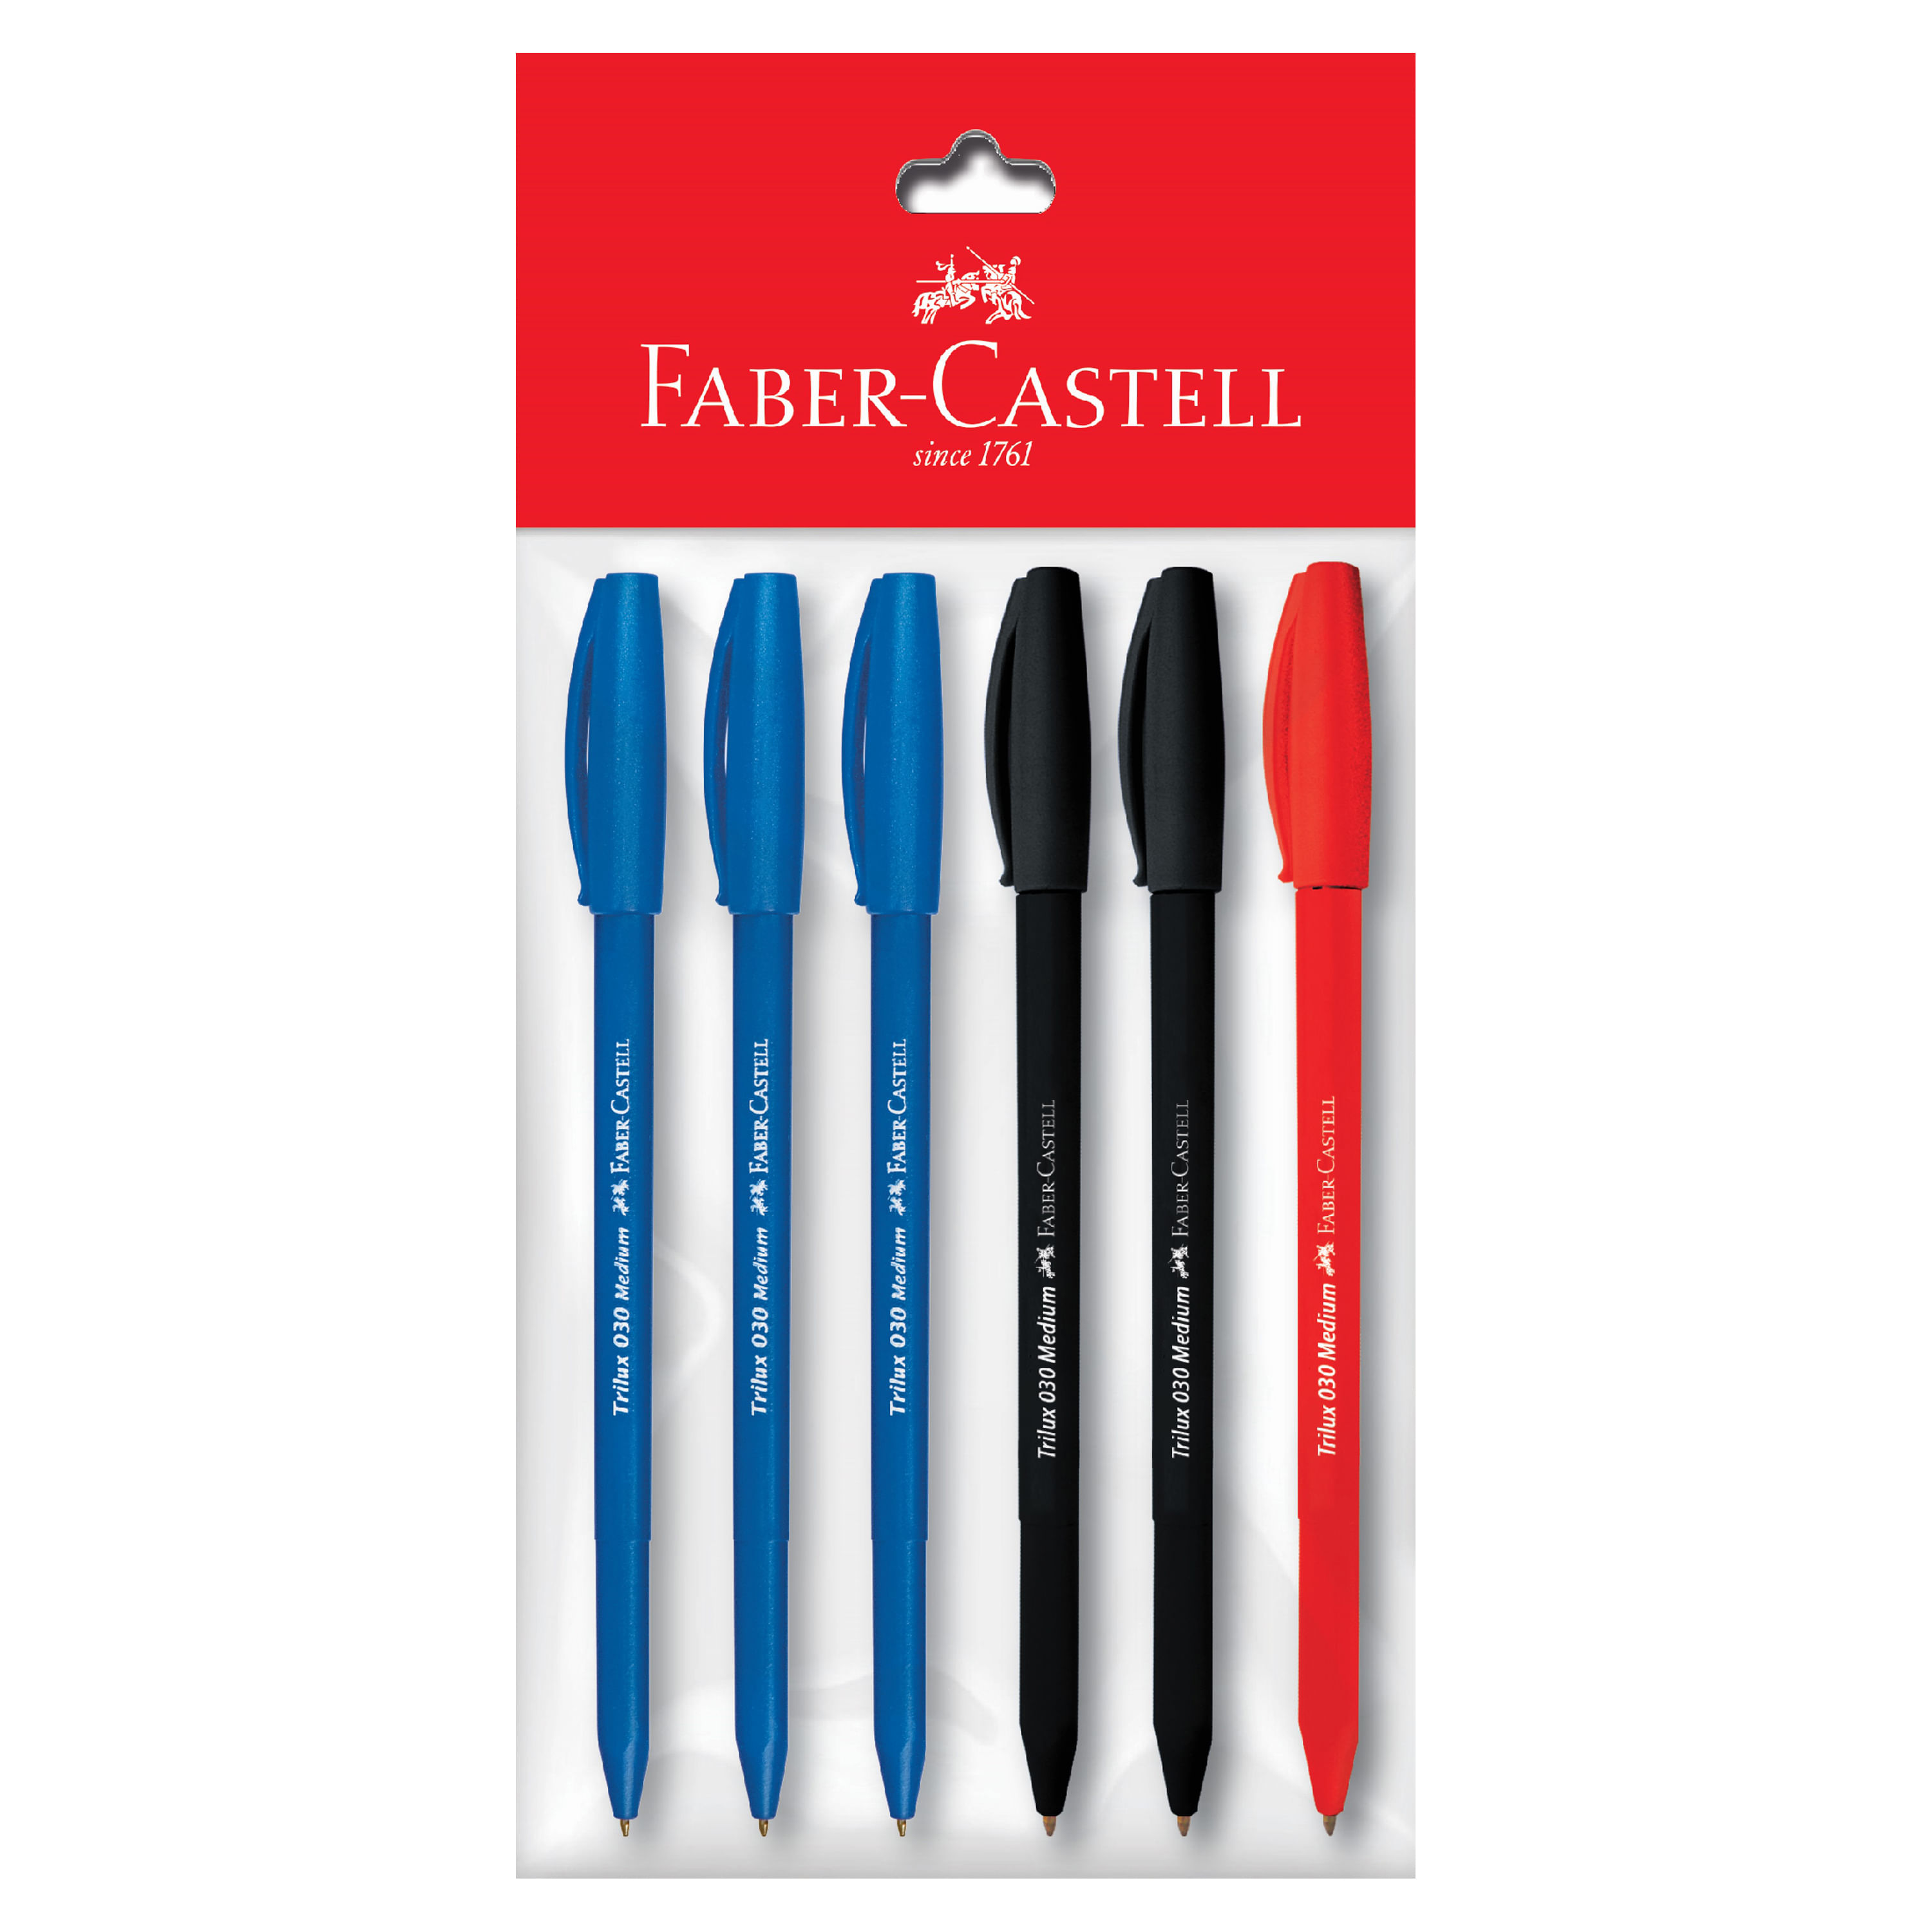 Boligrafo-Faber-Castell-Medio-030-3-Azul-2-Negro-1-Rojo-Blister-6-Unidades-1-42535